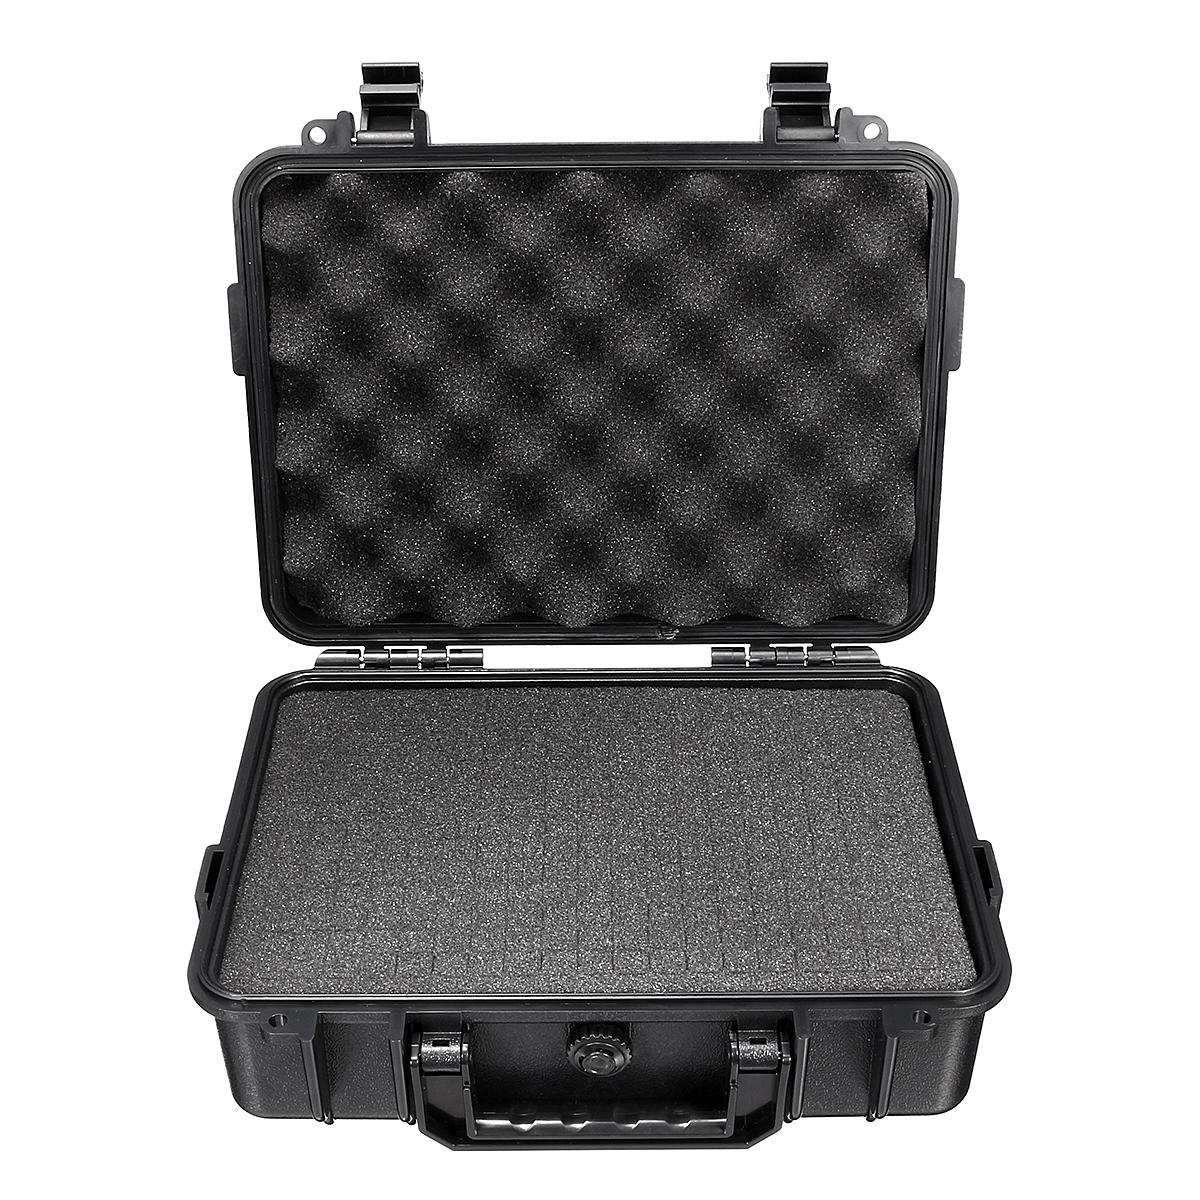 Waterproof-Hard-Carry-Tool-Case-Bag-Storage-Box-Camera-Photography-Sponge-Tool-Case-1835485-3